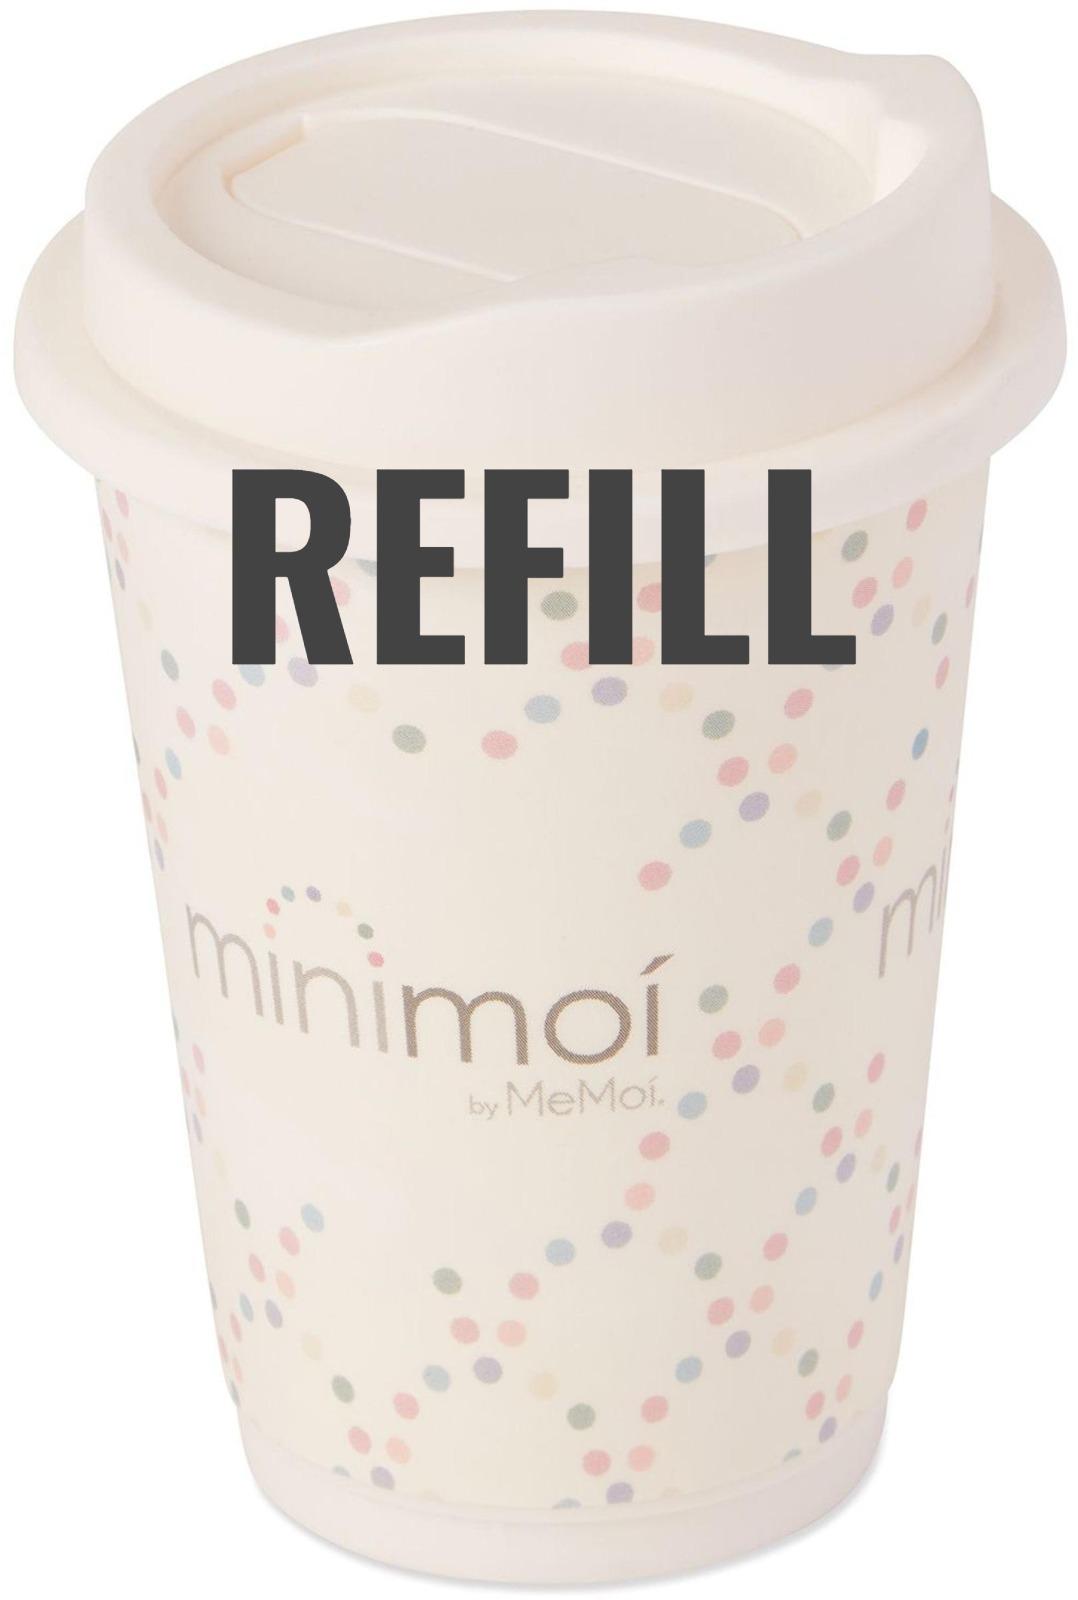 MiniMoi by Memoi On-The-Go Wipes Refill Pack